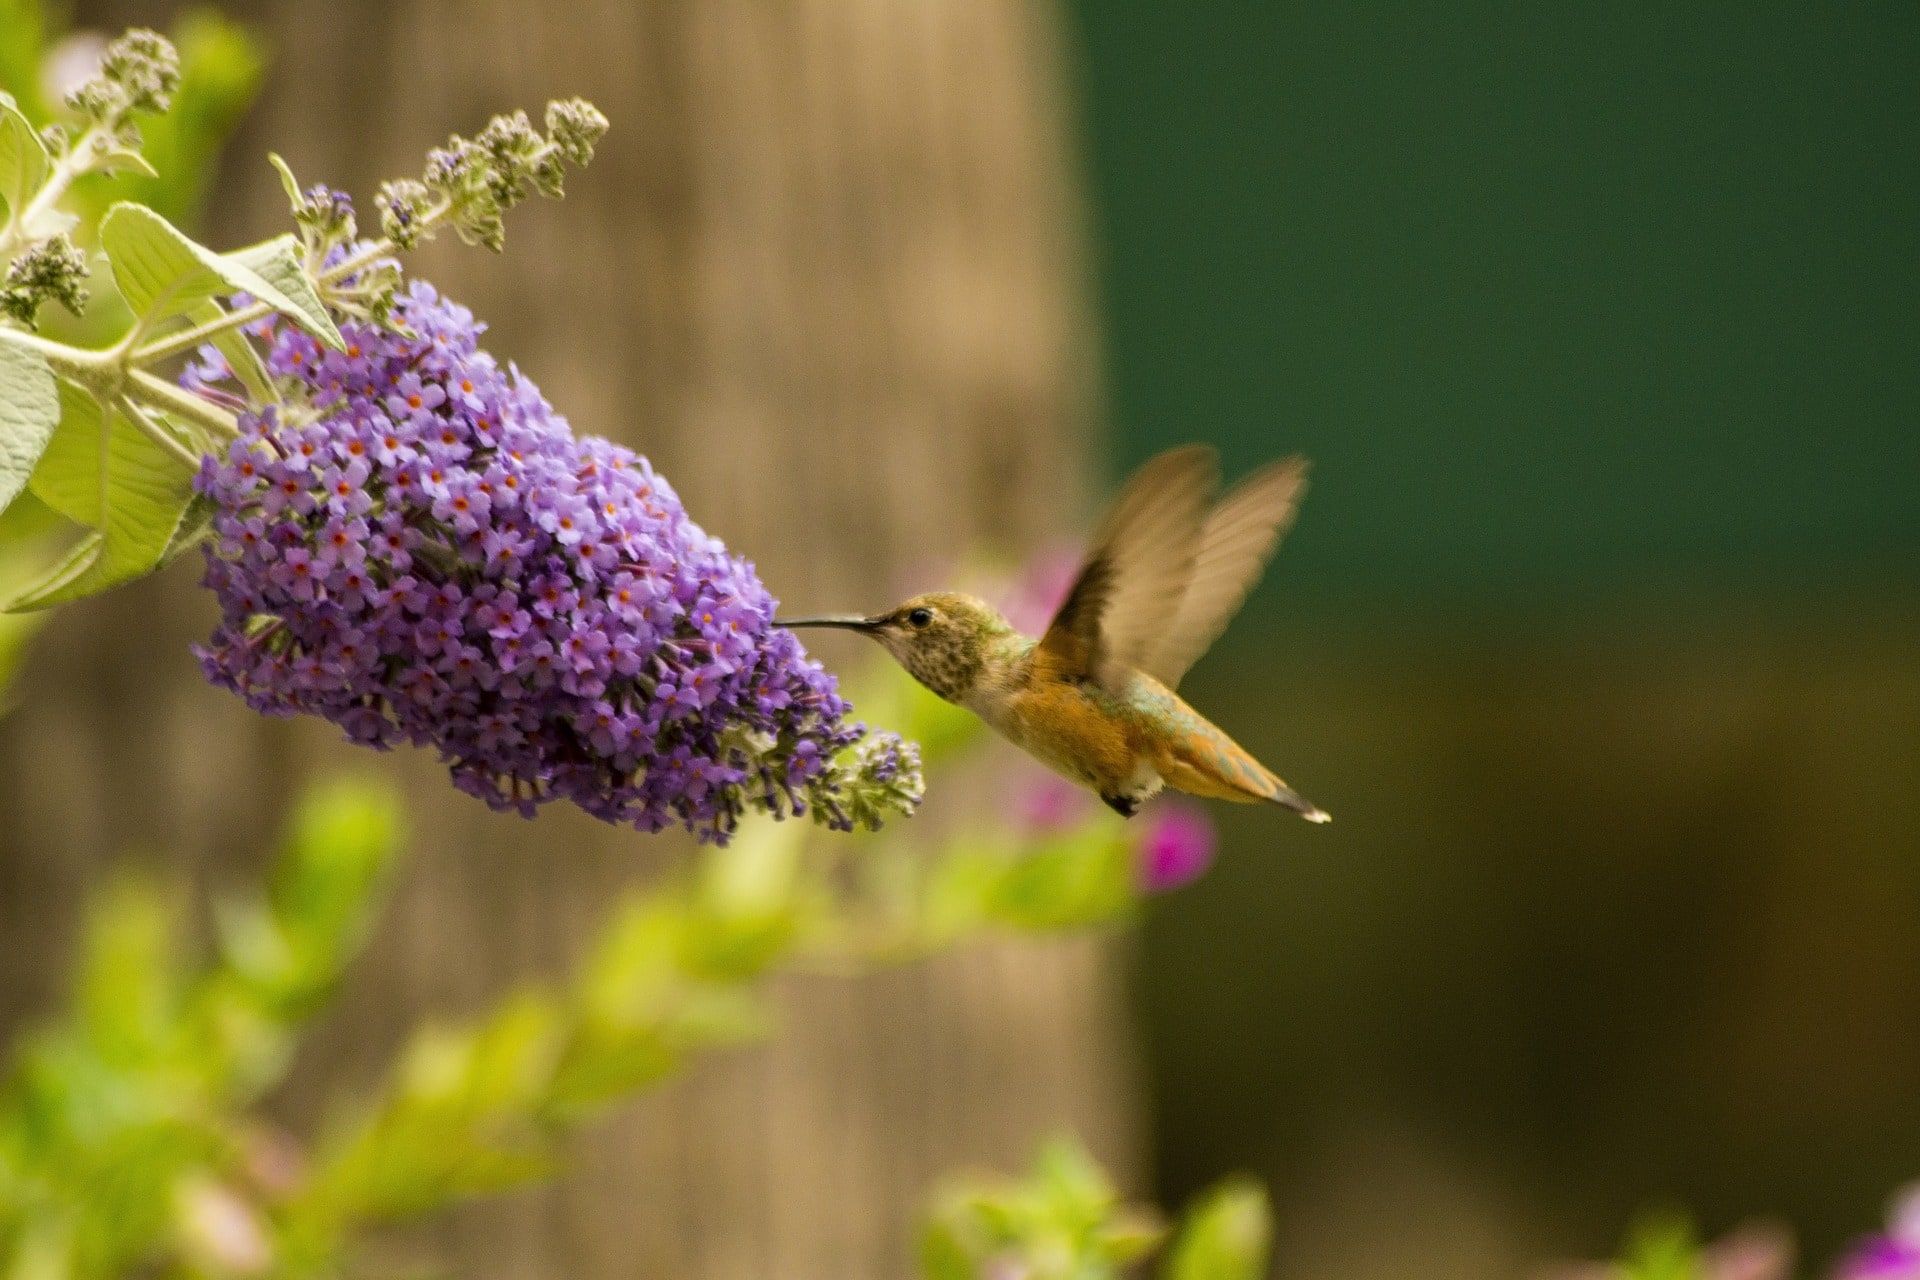 Humming bird sipping nectars on flower.